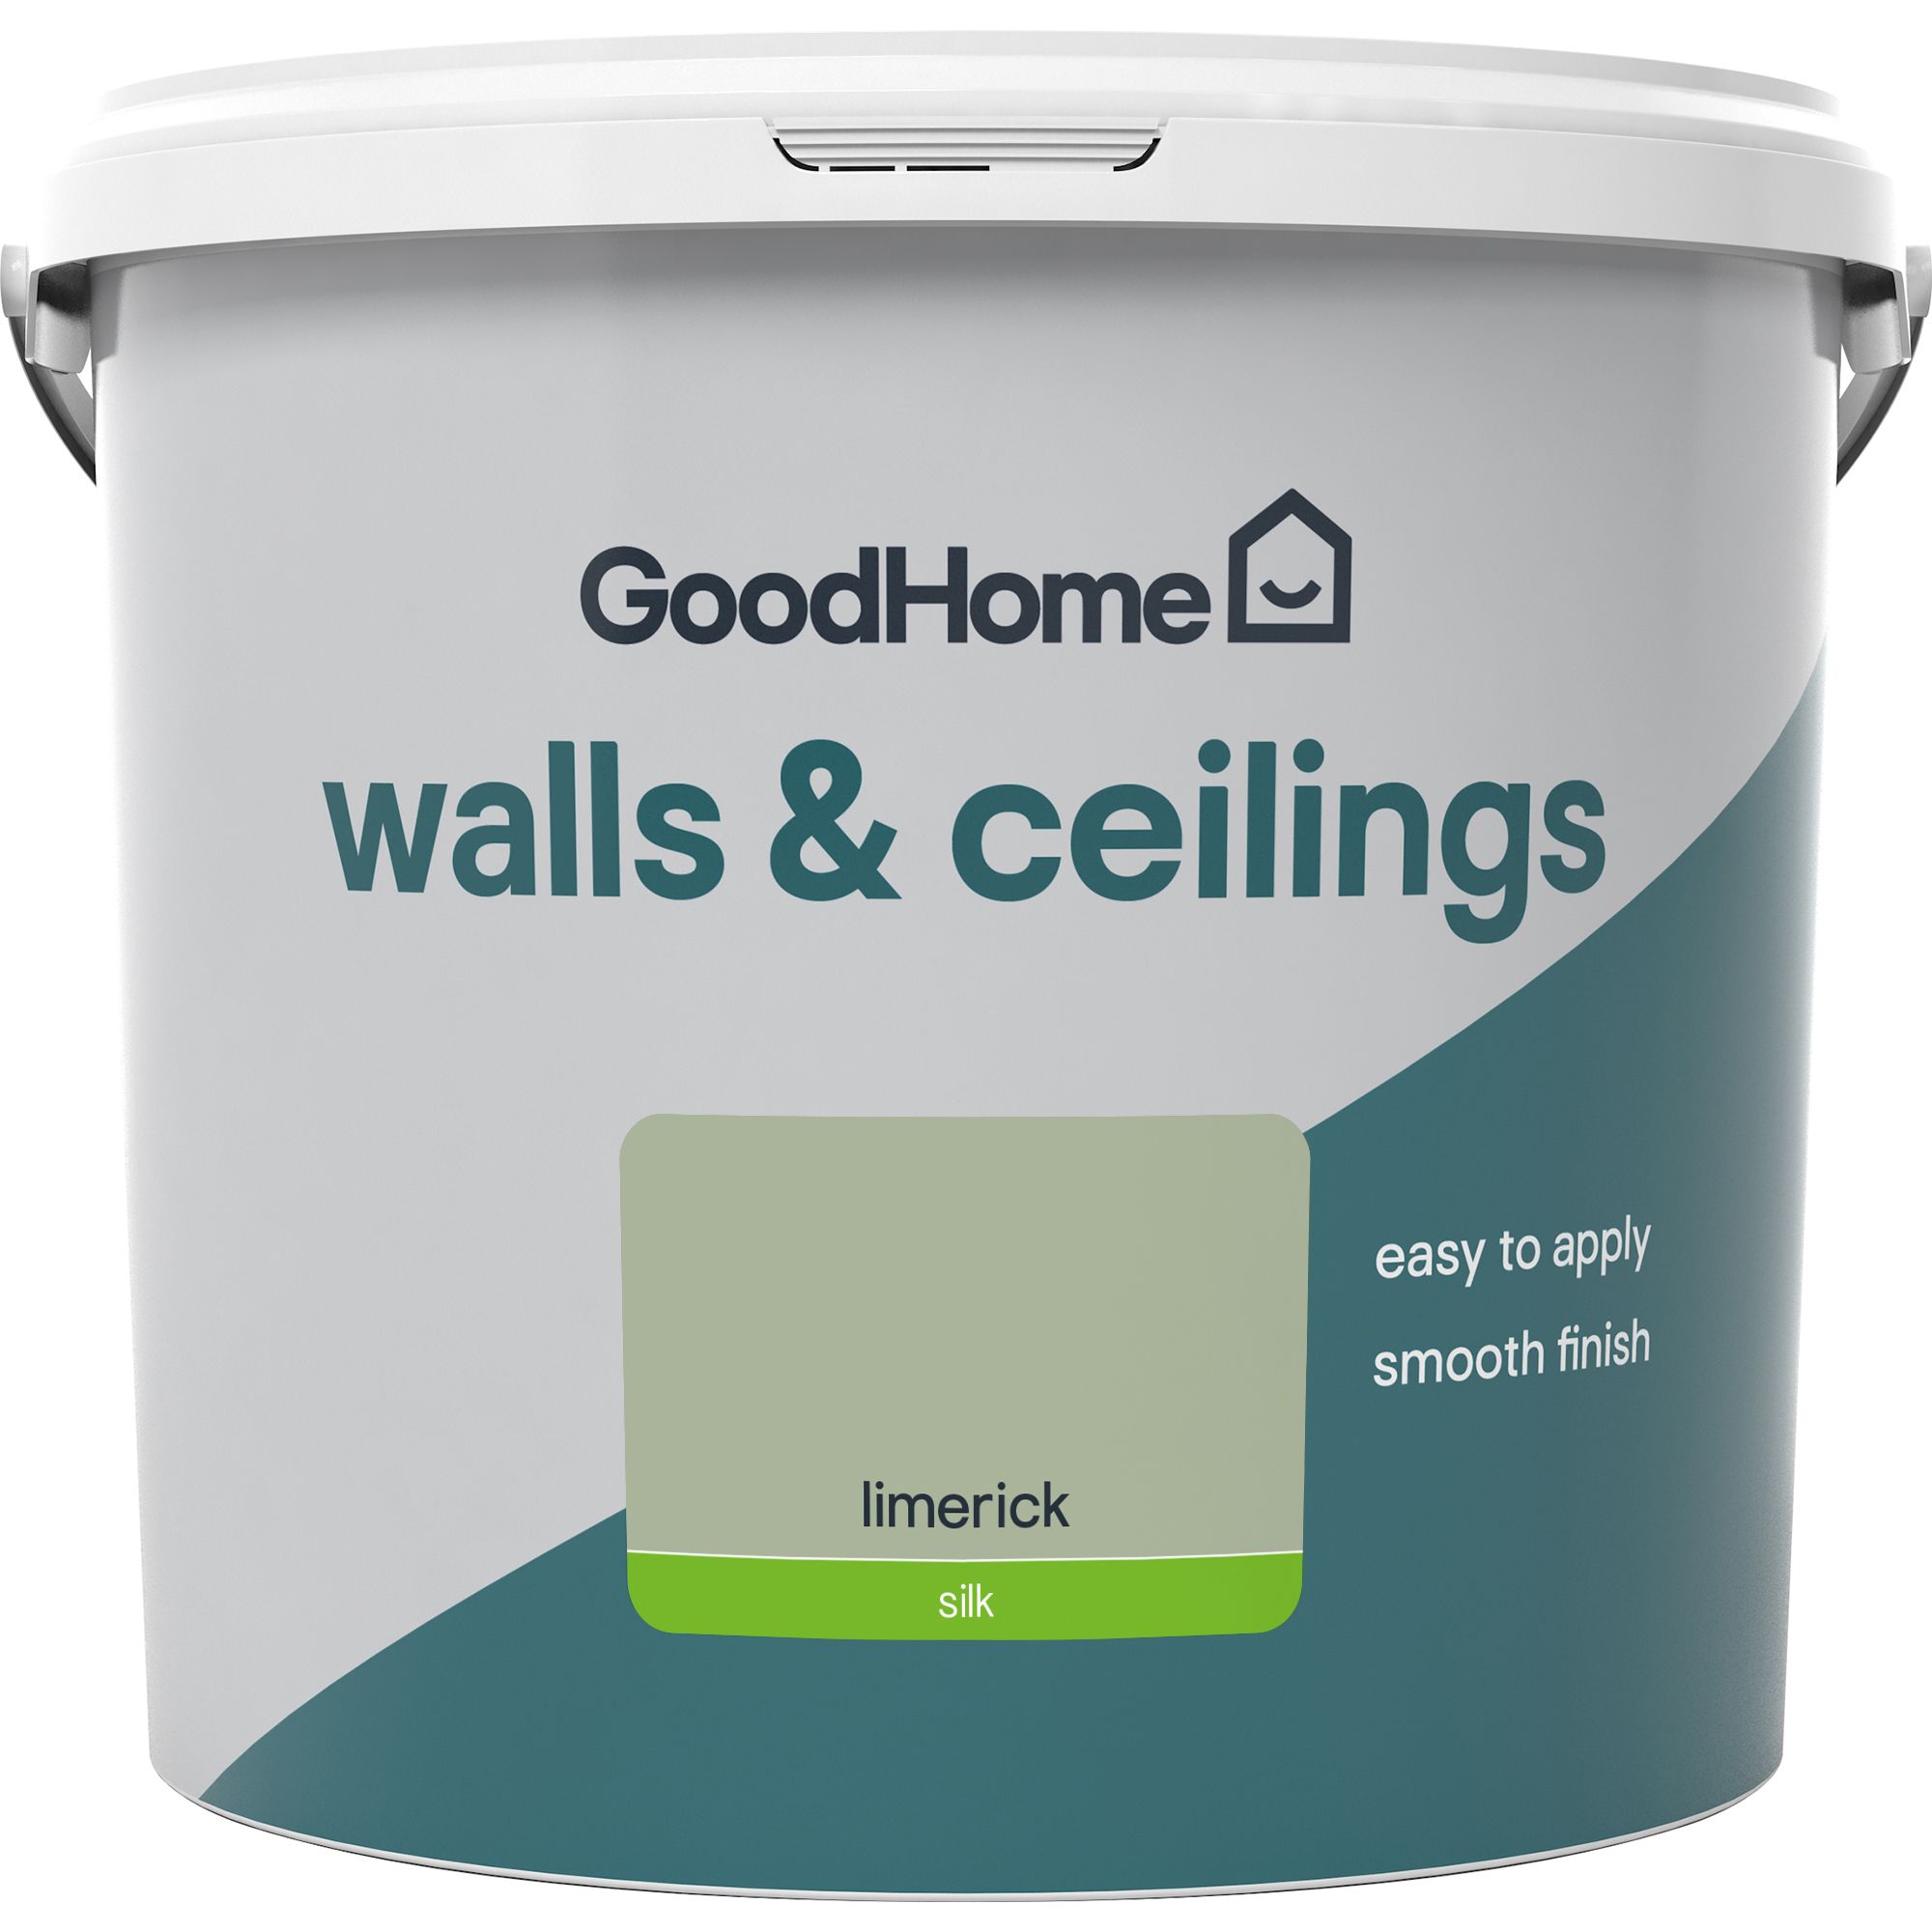 GoodHome Walls & ceilings Limerick Silk Emulsion paint, 5L